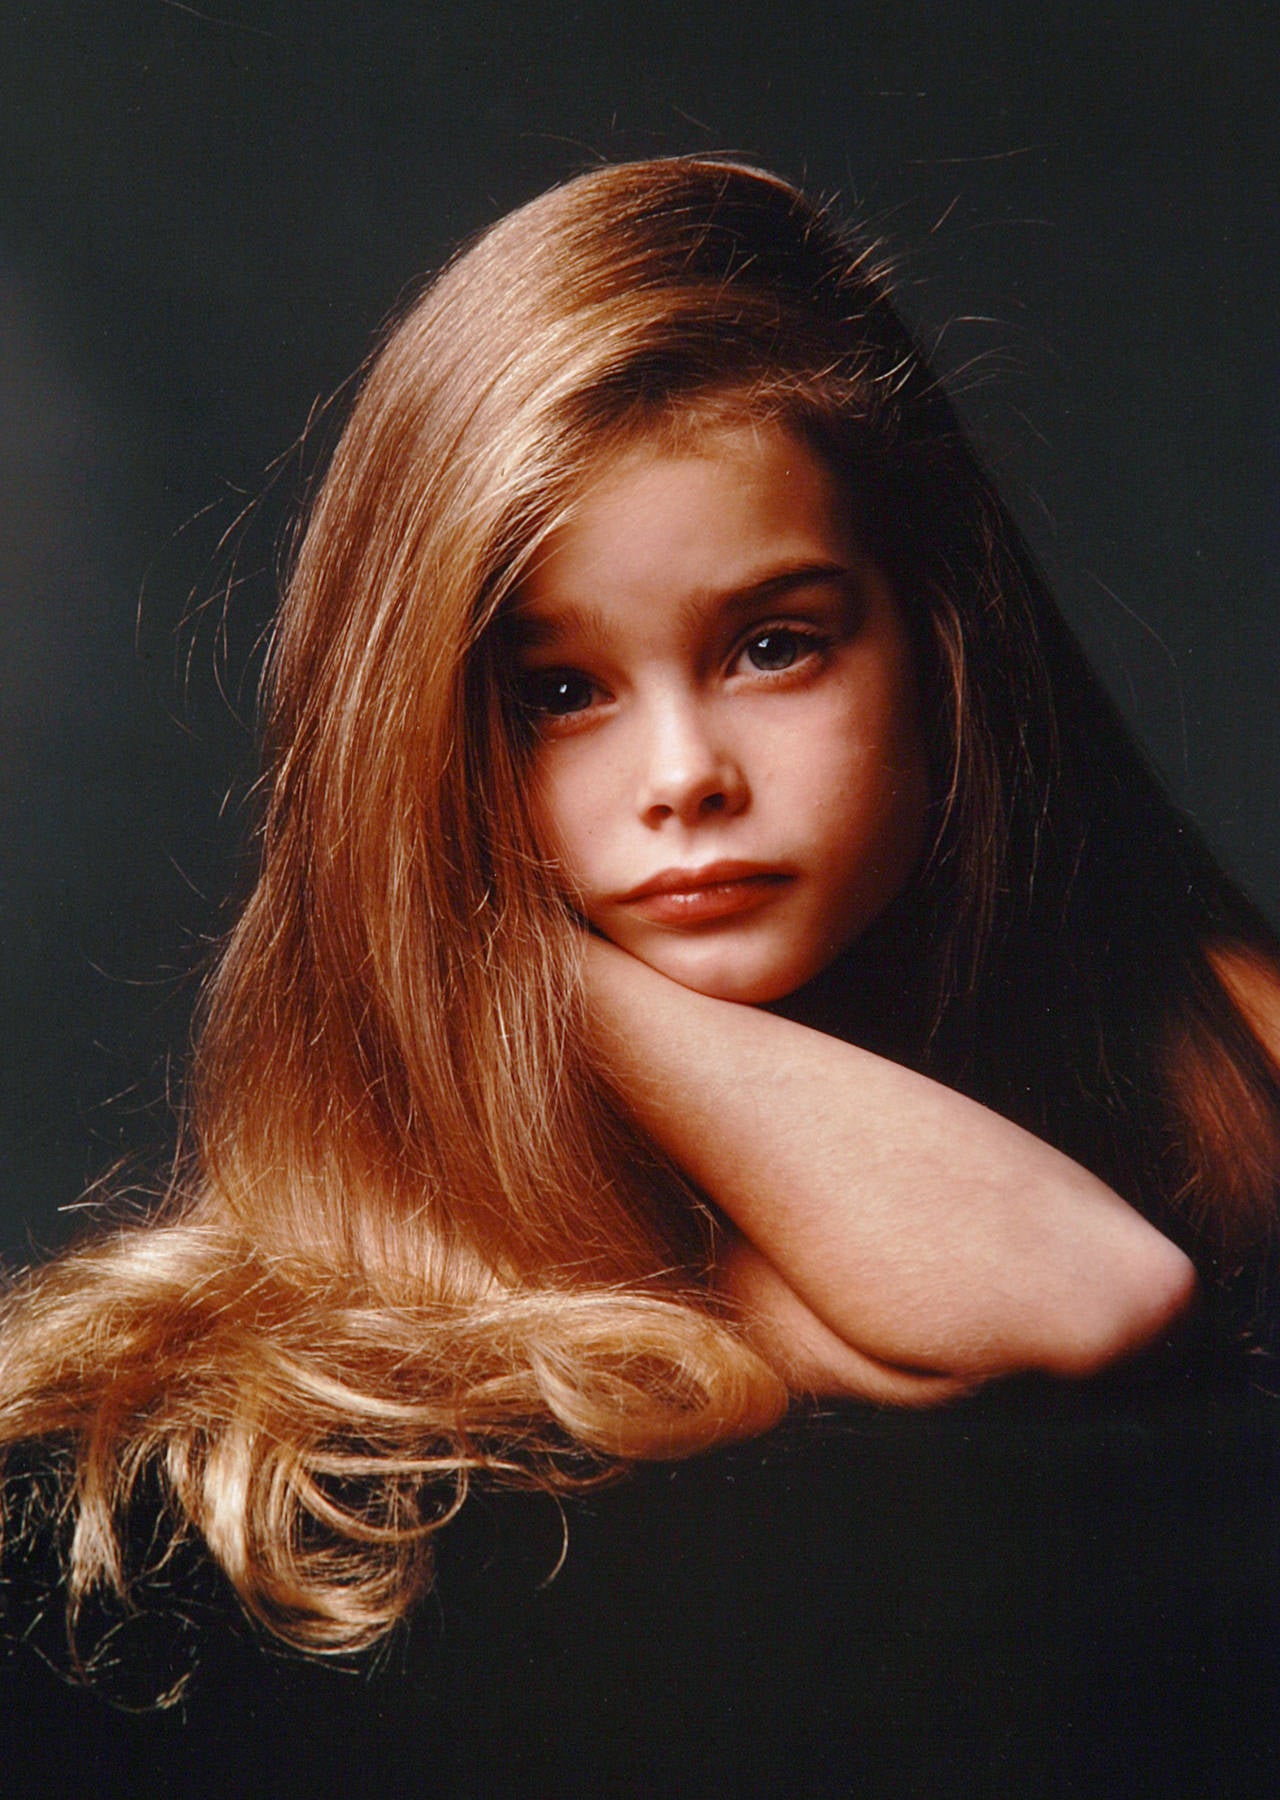 Brooke Shields Portrait - Photograph by Henry Wolf